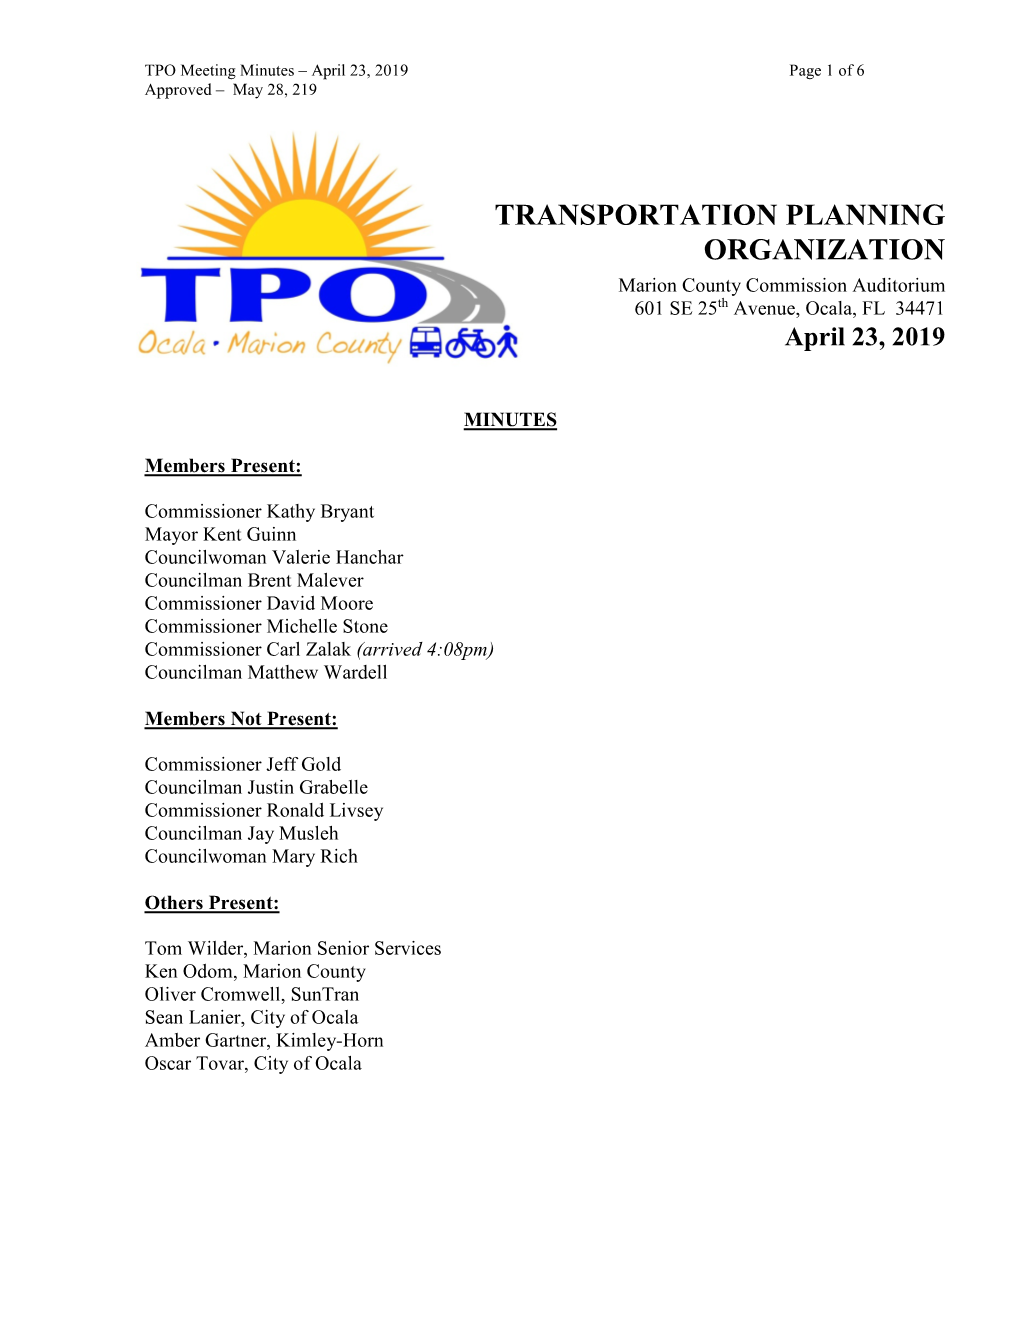 April-23-2019-TPO-Meeting-Minutes